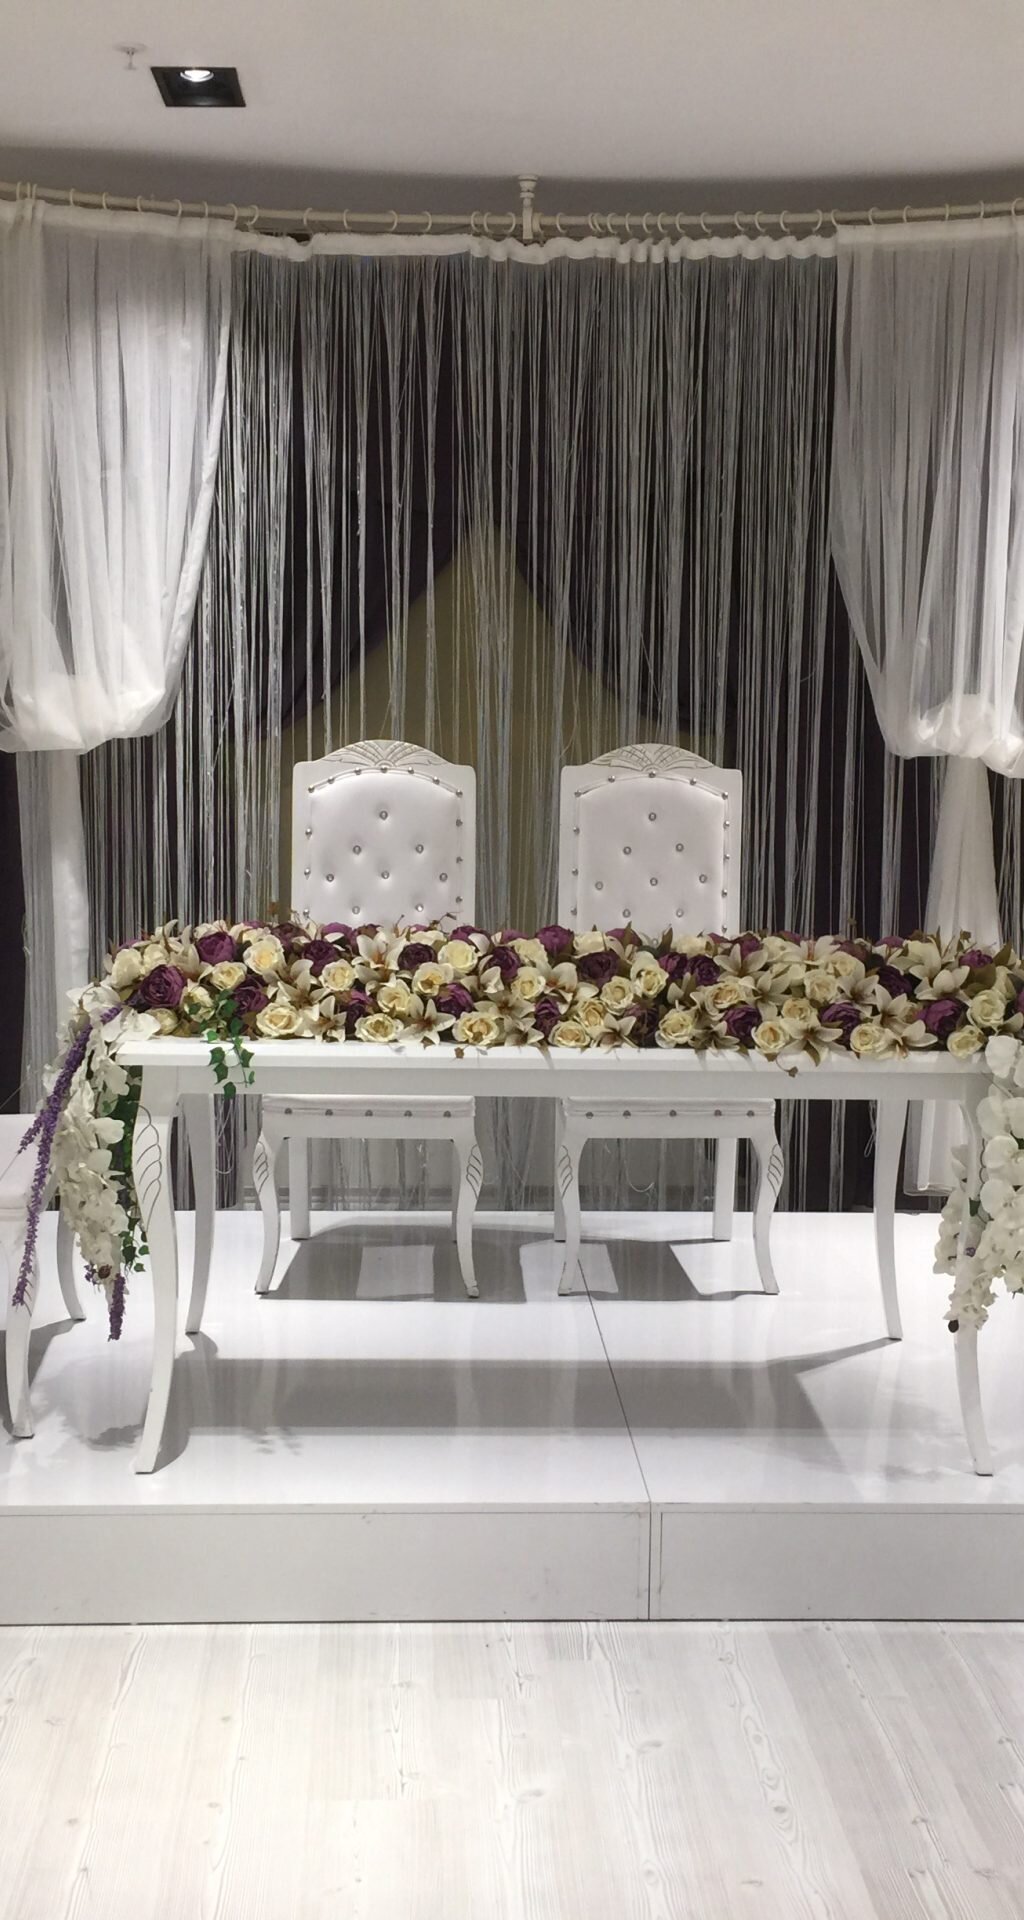 Asrı Saadet Düğün Salonu Ankara